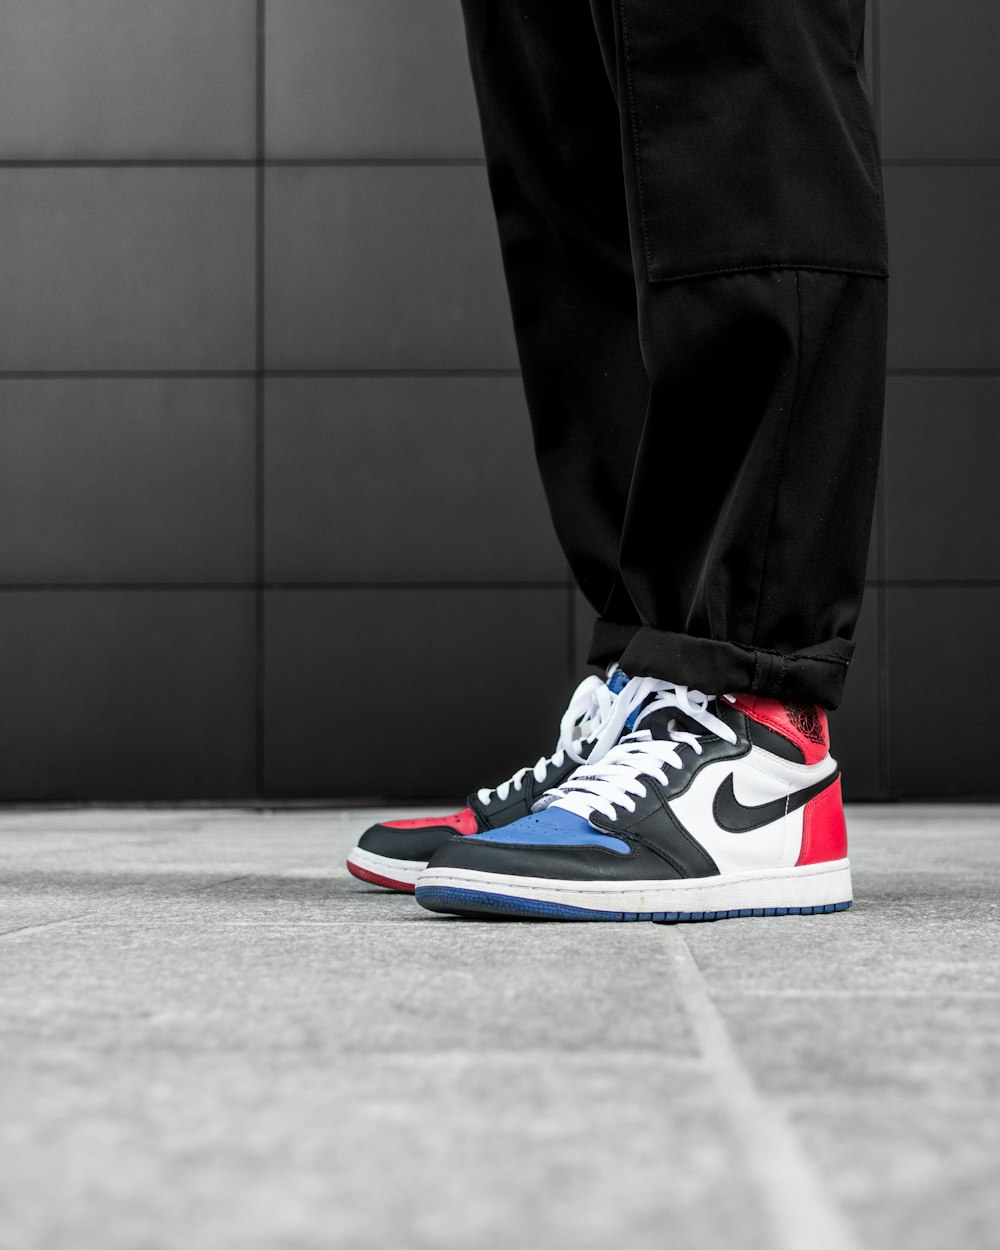 Maligno Arado Bóveda man wears blue-red-and-black Nike Air Jordan 1 shoes photo – Free Shoe  Image on Unsplash